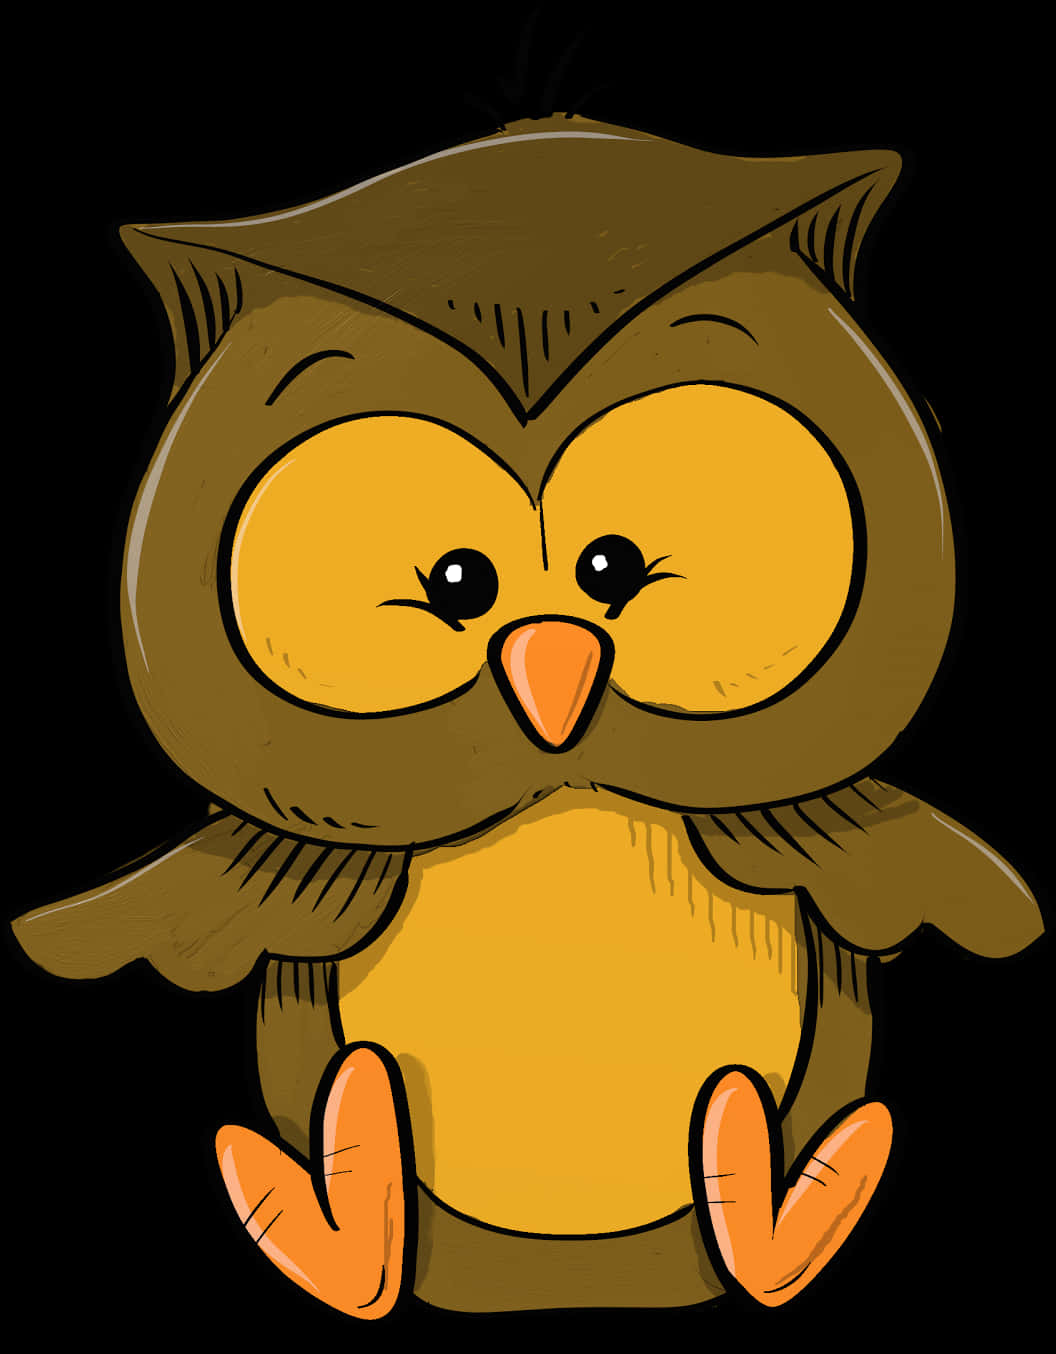 Cartoon Owl Illustration